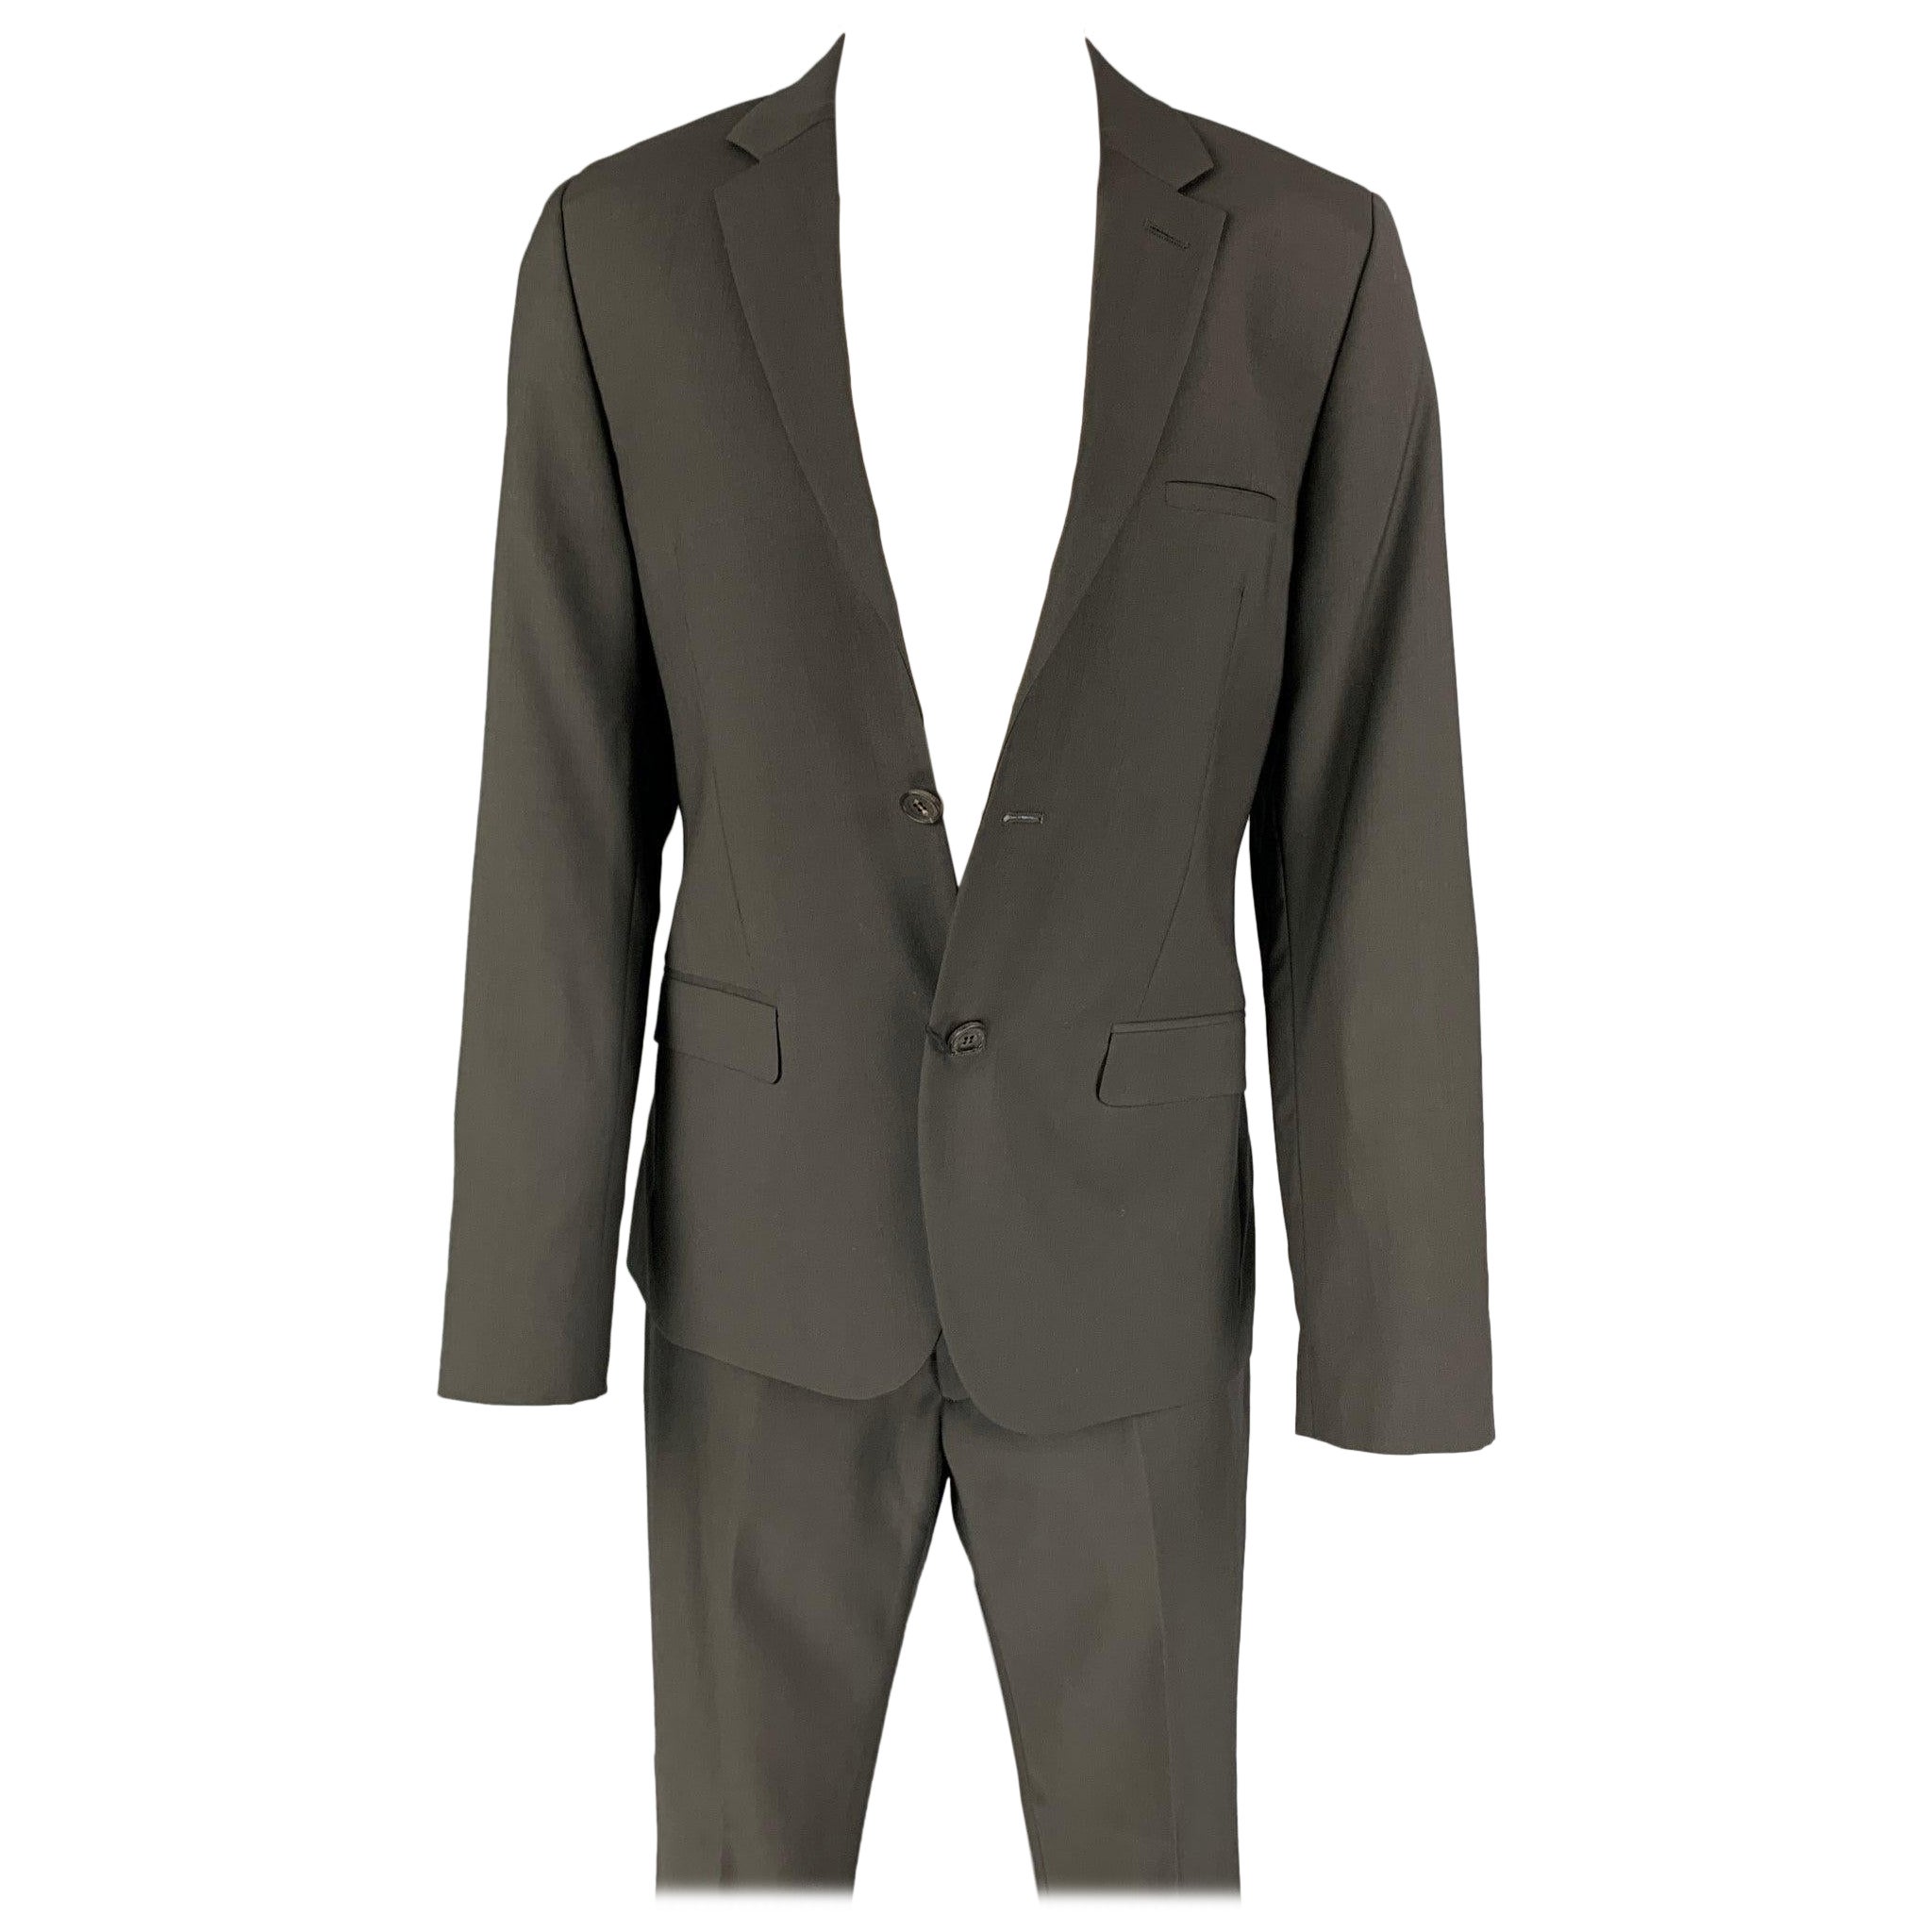 CALVIN KLEIN COLLECTION Size 36 Charcoal Wool Notch Lapel Suit For Sale